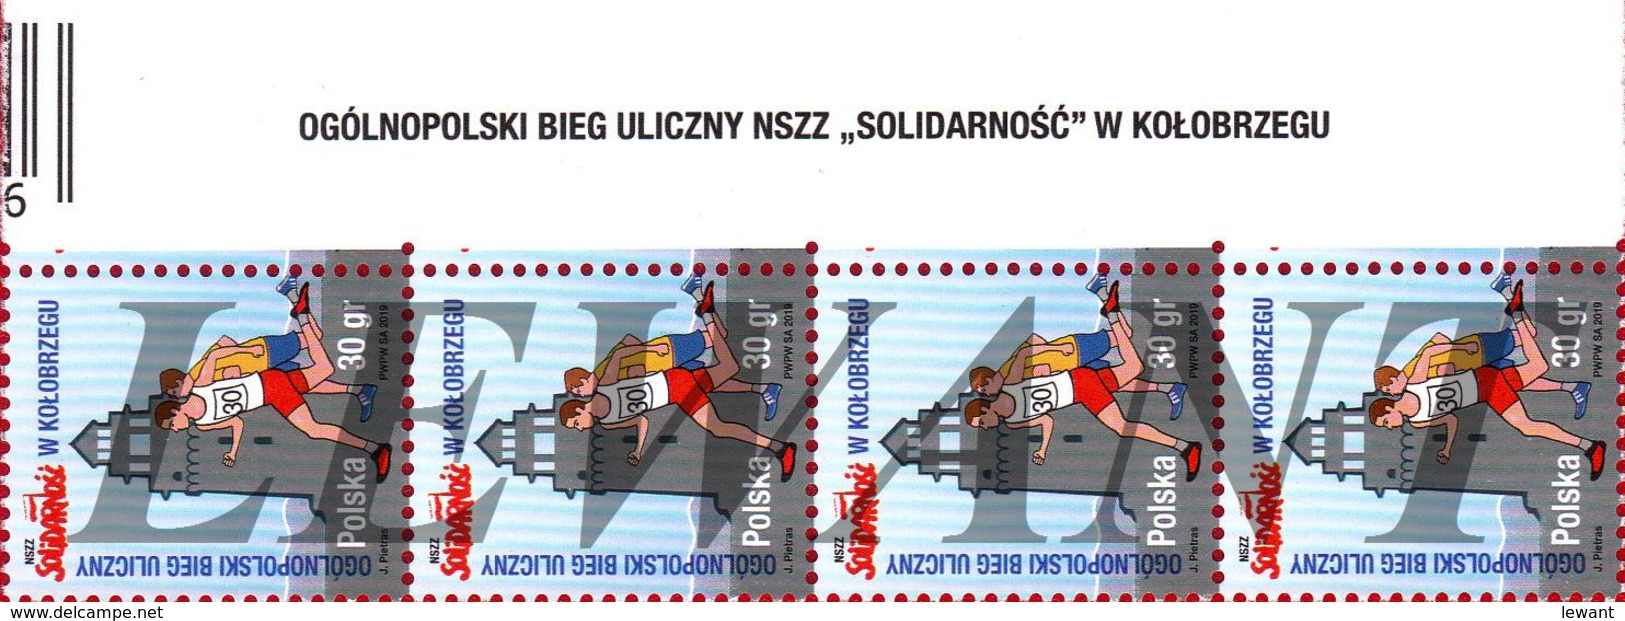 2019.08.02. Nationwide Street Run NSZZ SOLIDARNOSC In Kolobrzeg 4v+margin - MNH - Unused Stamps